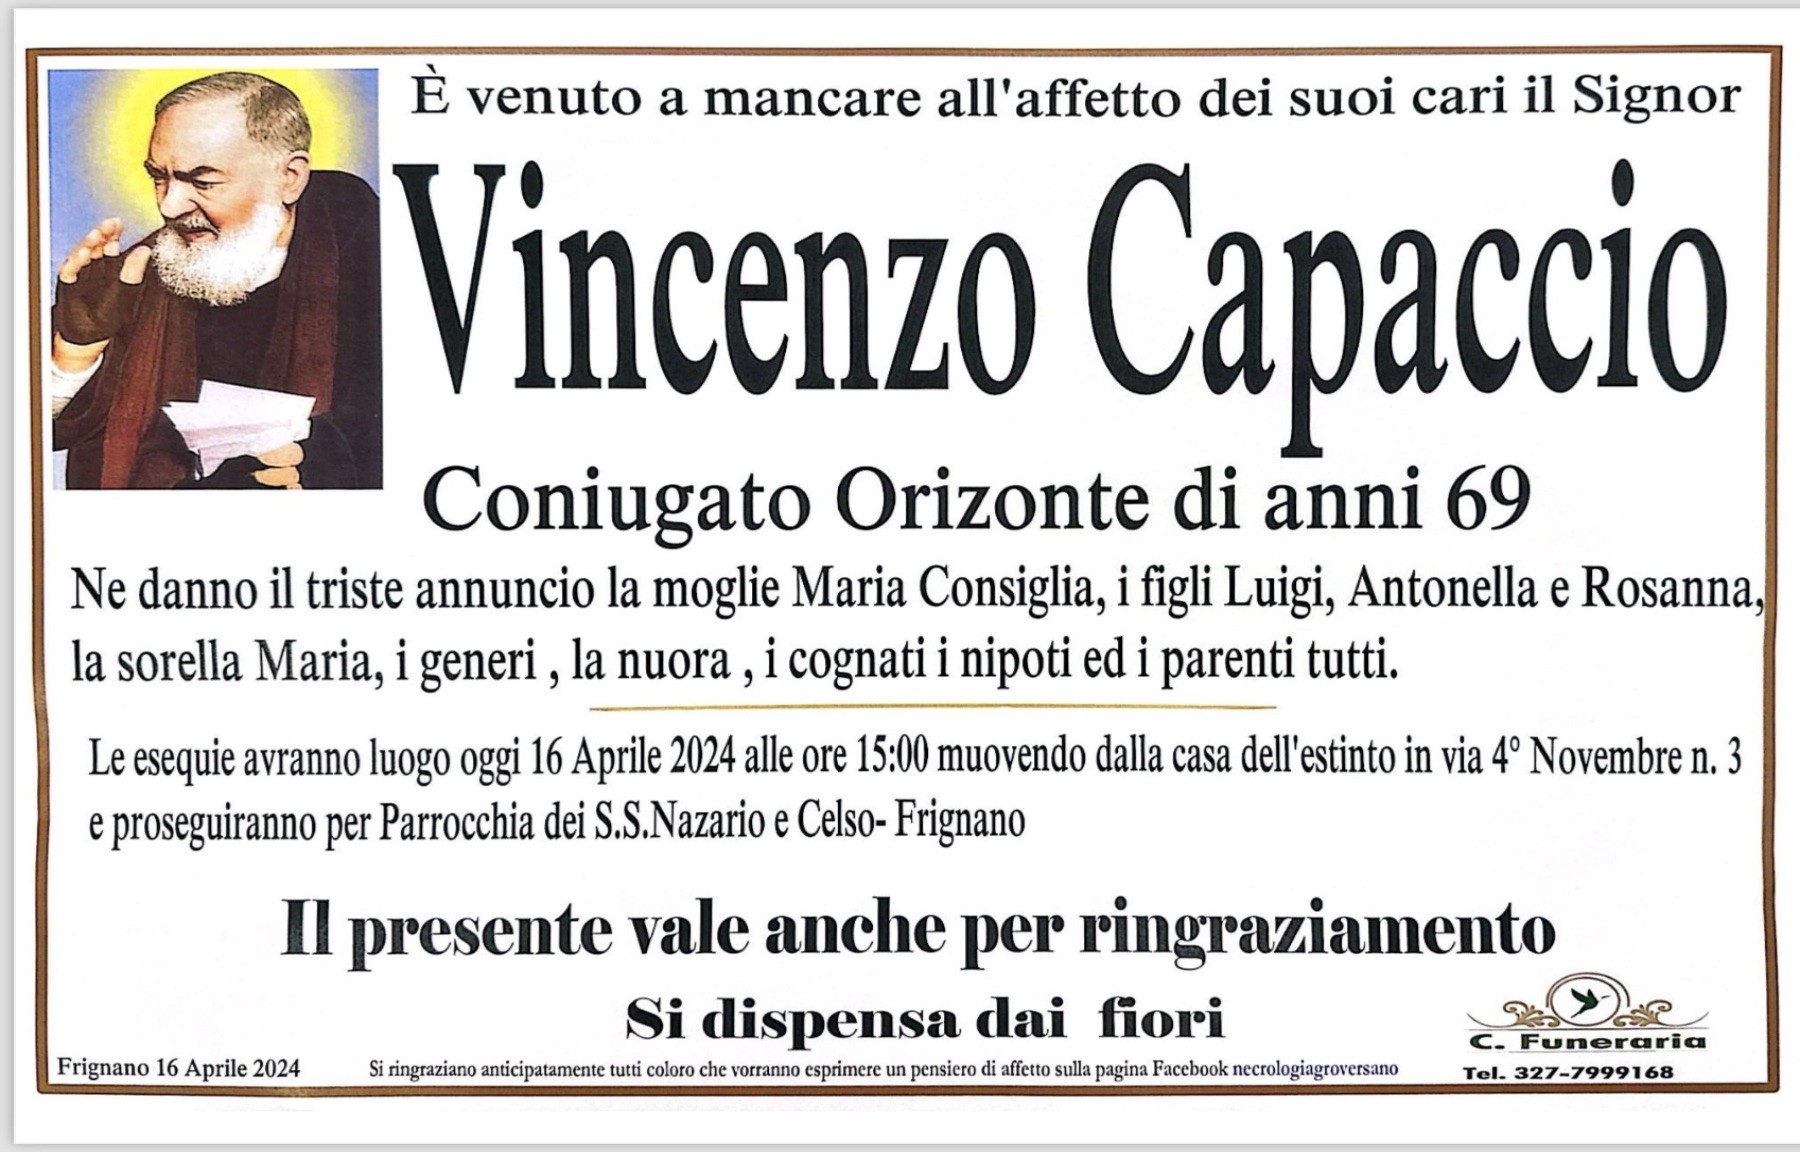 Vincenzo Capaccio